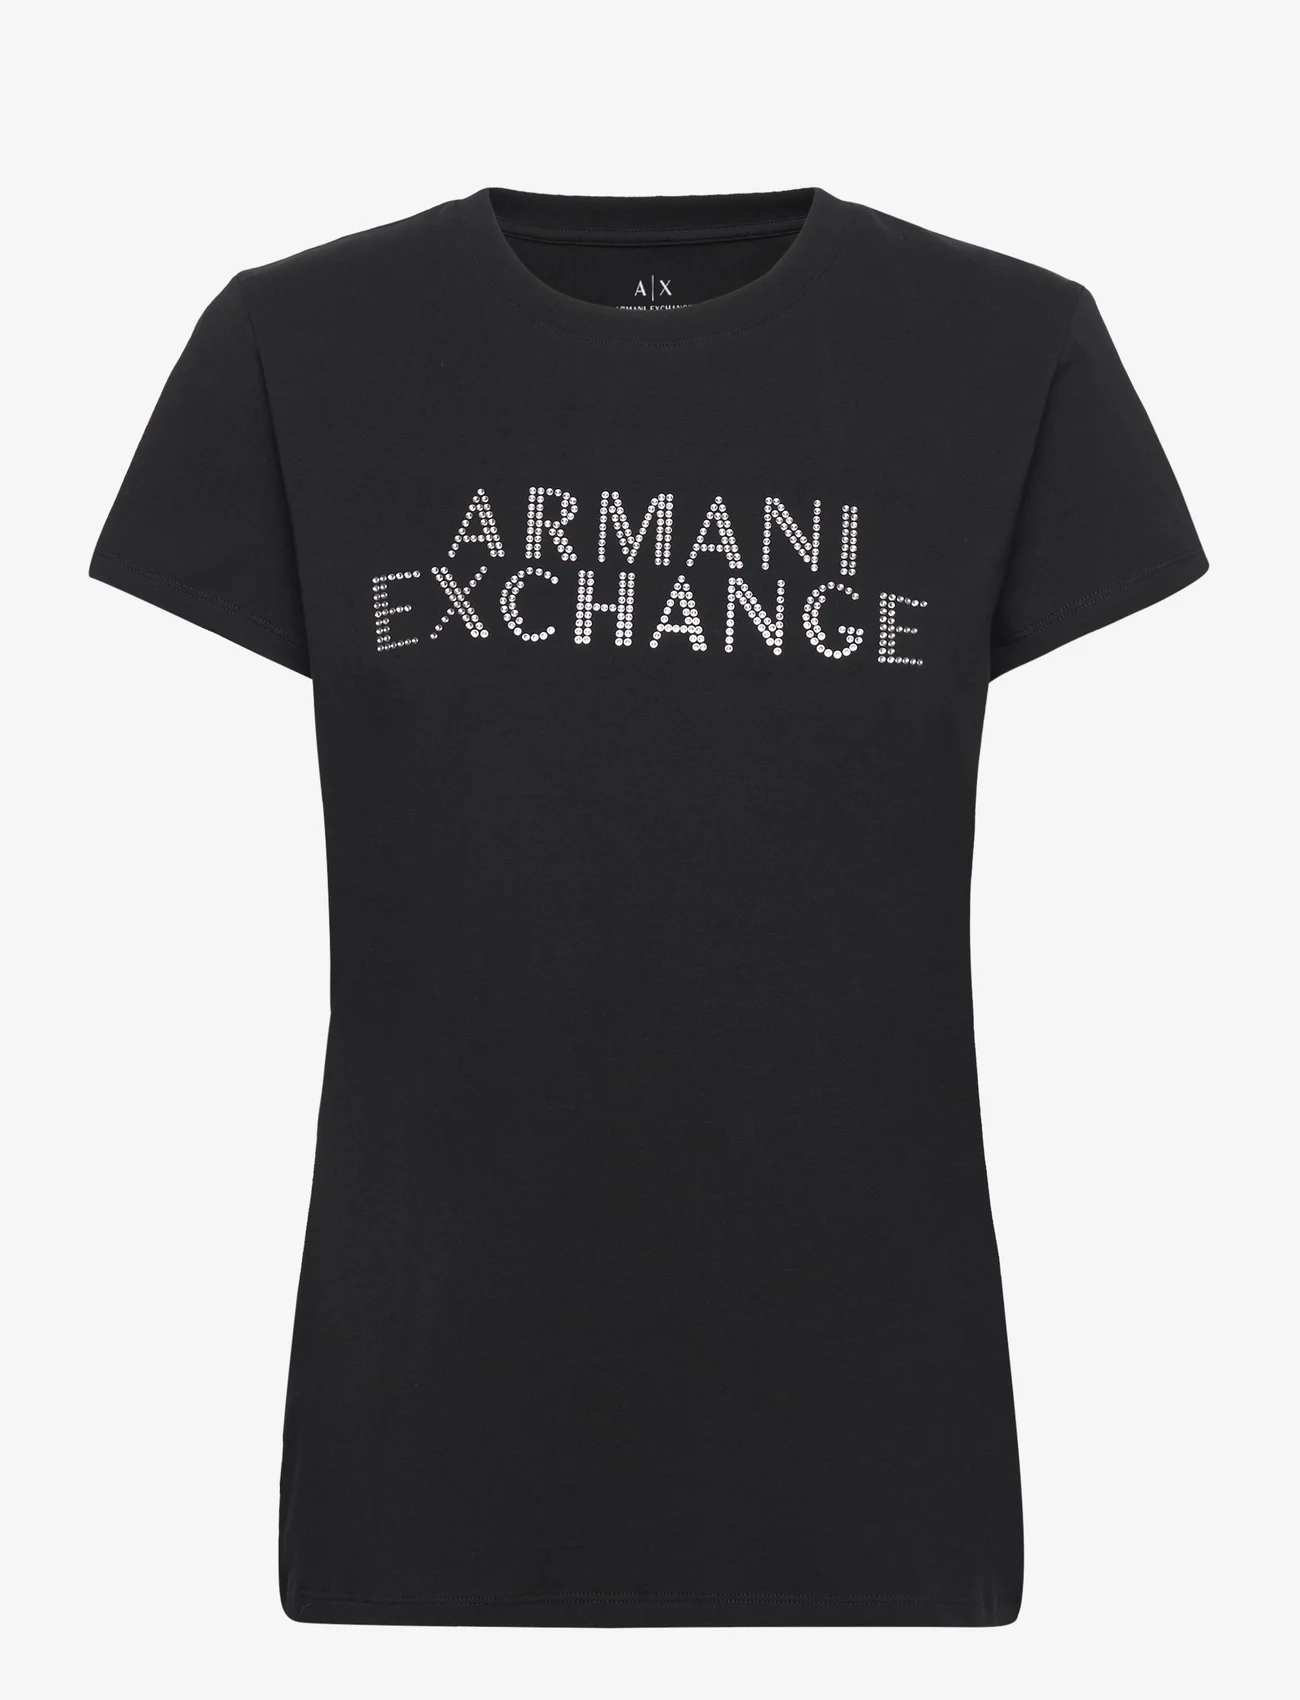 Armani Exchange - T-SHIRT - t-paidat - 1200-black - 0